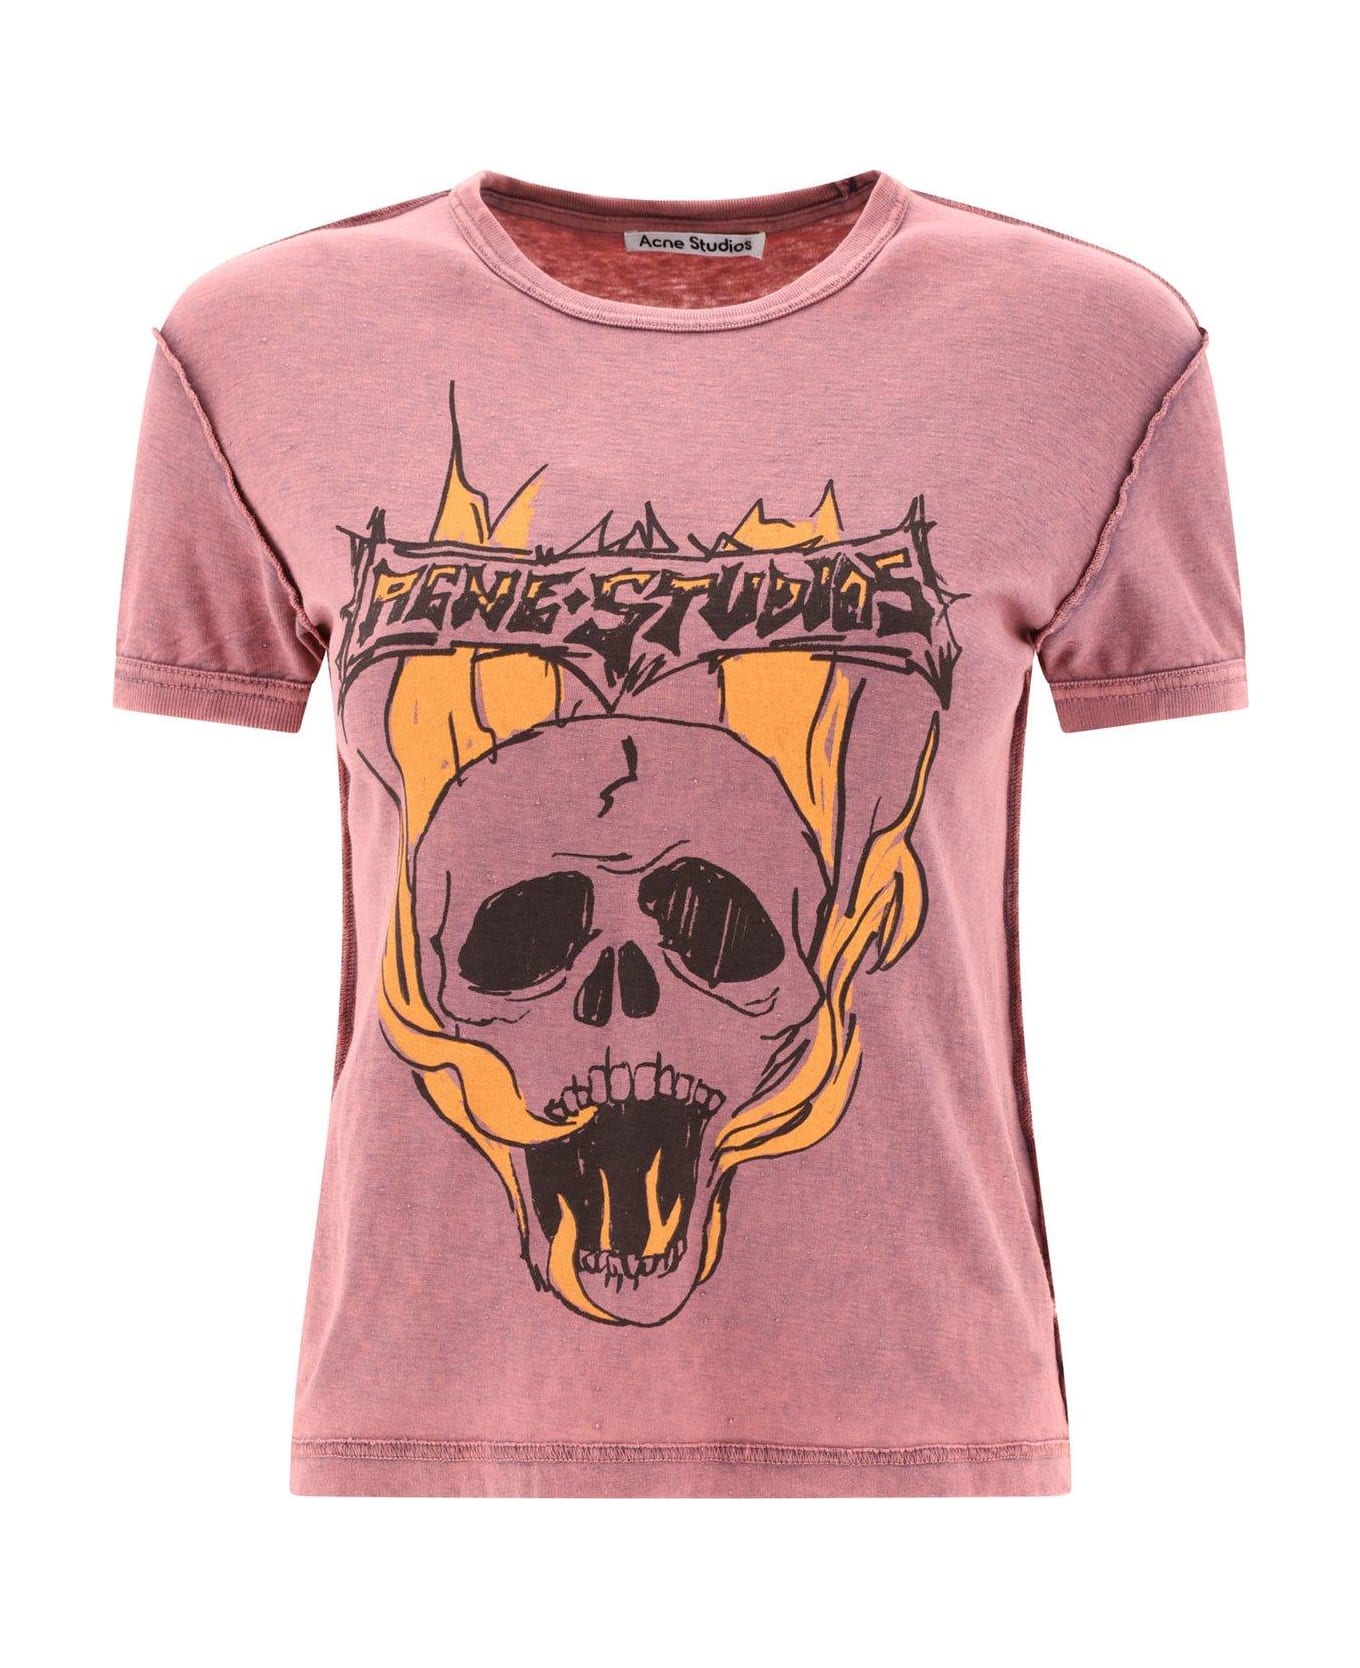 Acne Studios Graphic Printed Crewneck T-shirt - Ctl Mauve Pink Tシャツ